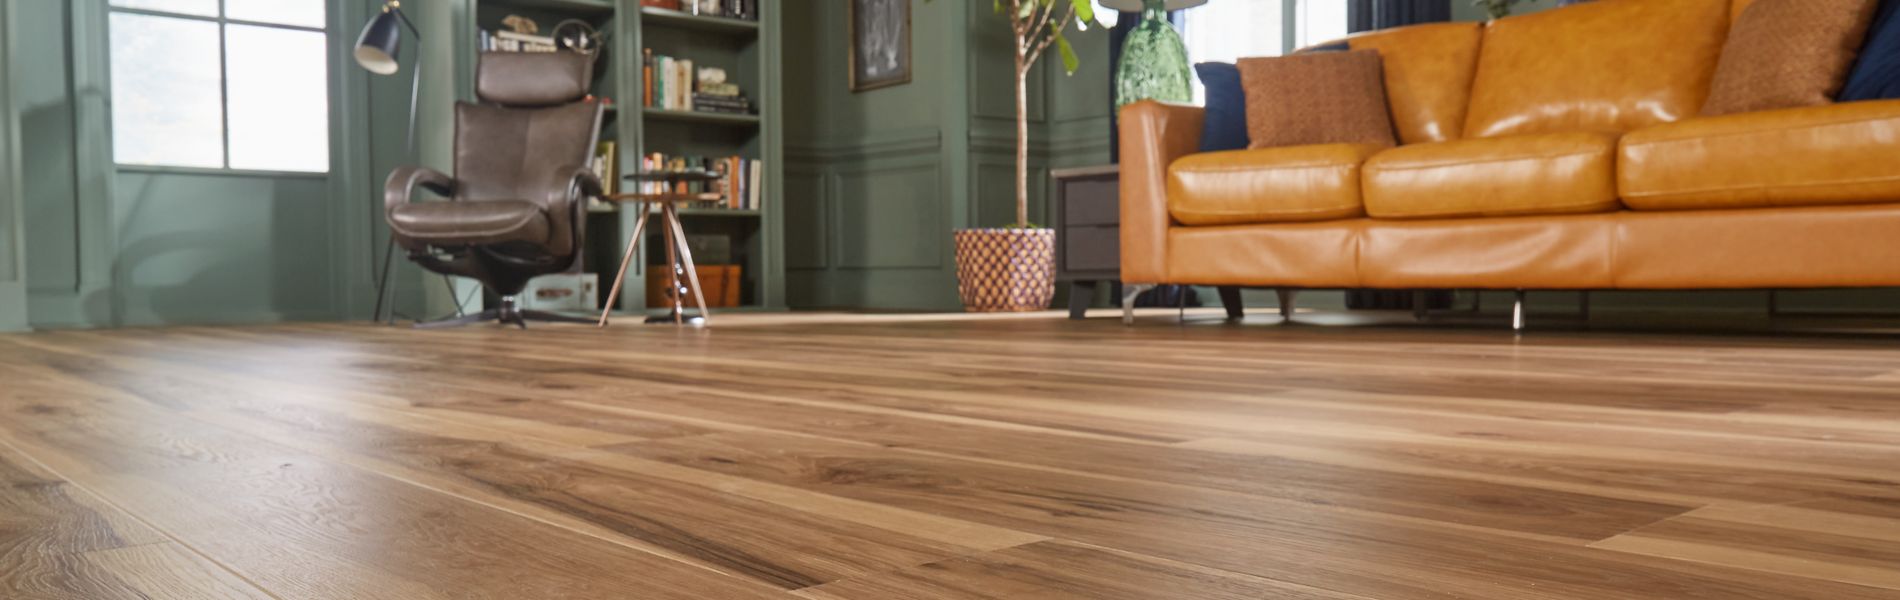 resilient, family-friendly floors in living room